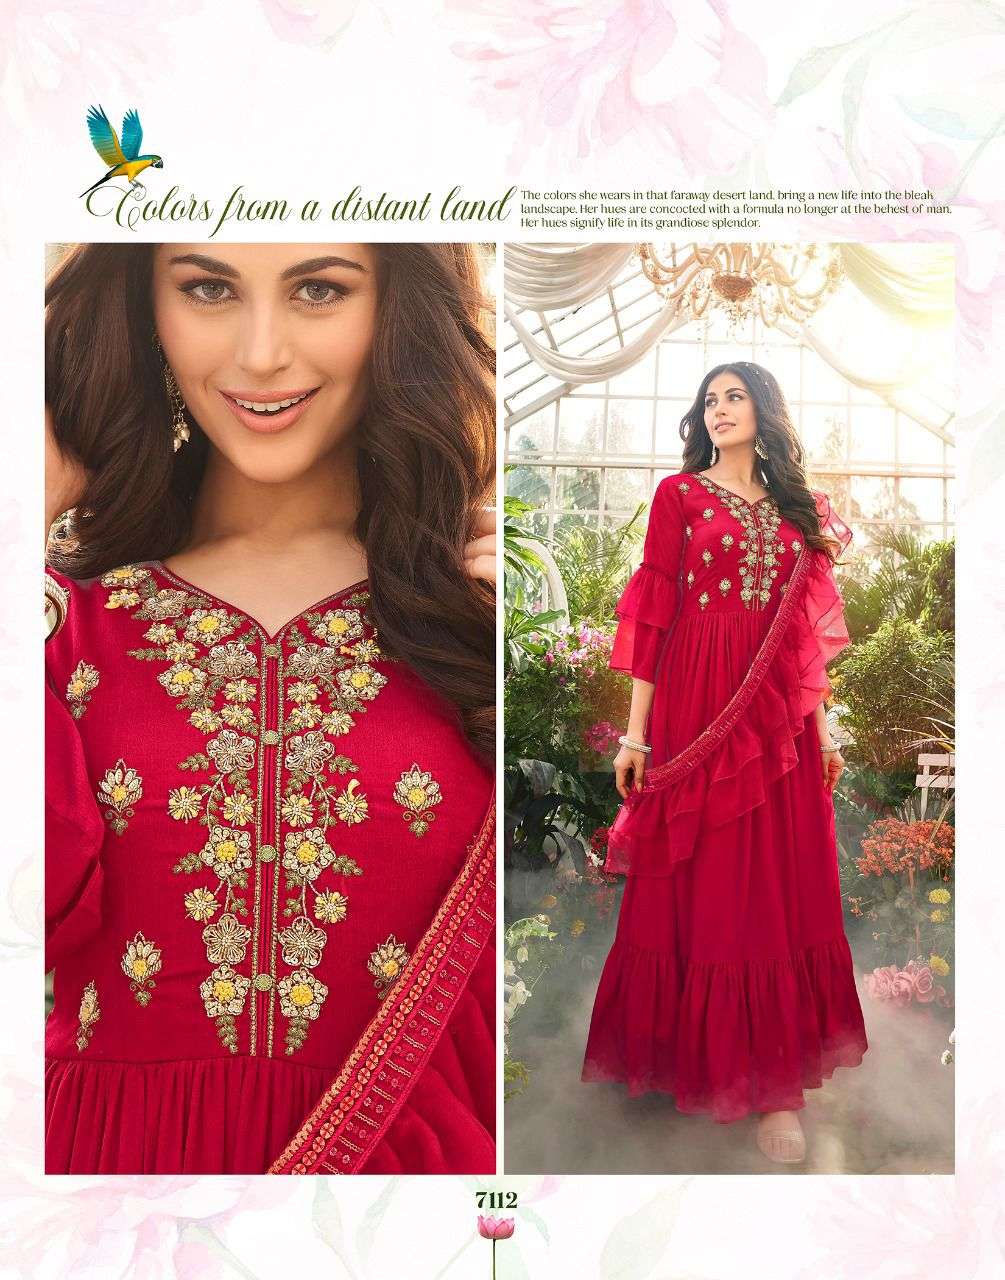 anju fabrics wedding masti vol 2 7111-7114 series premium fancy gown with dupatta wholesale price 